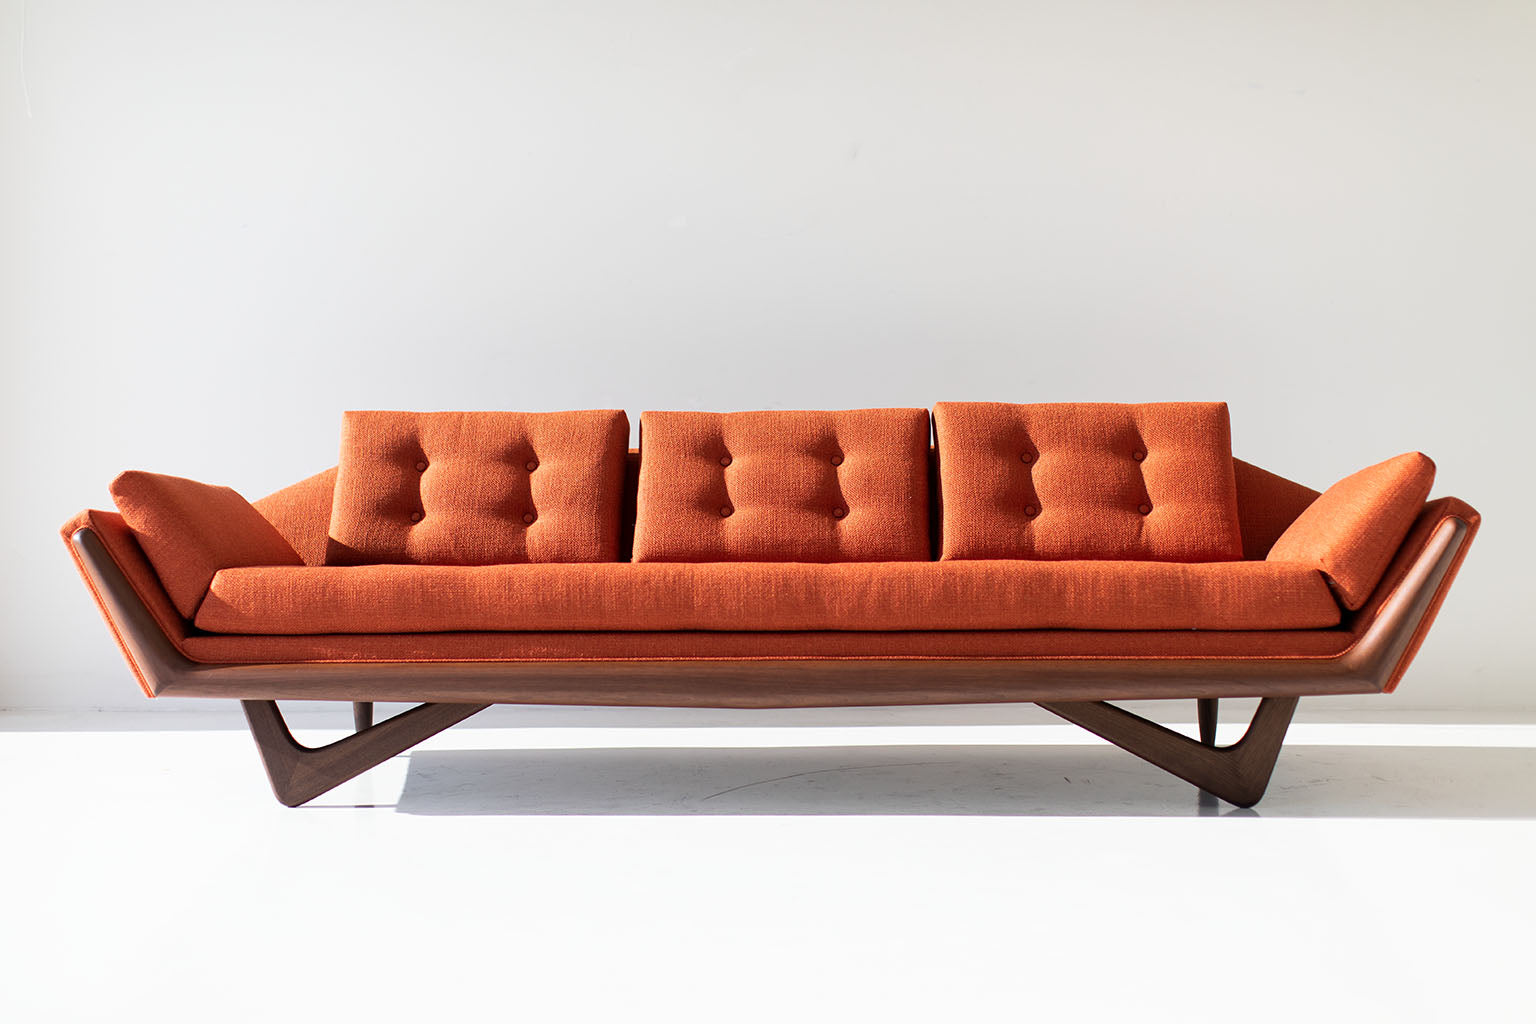      jetson-orange-modern-wood-sofa-1404-01